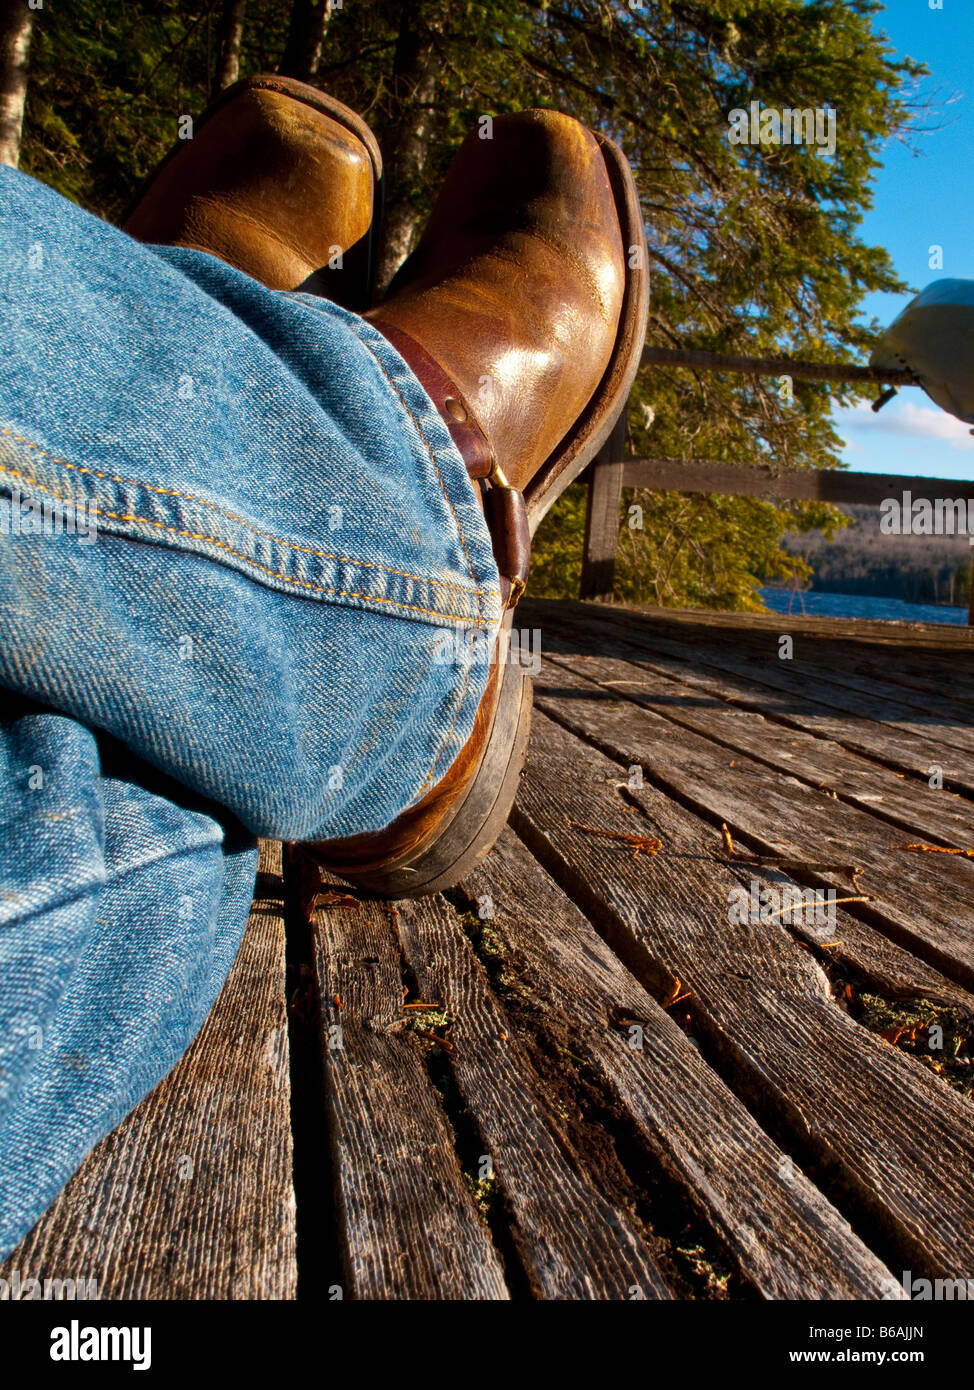 Botas vaqueras blue jeans fotografías e imágenes de alta resolución - Alamy